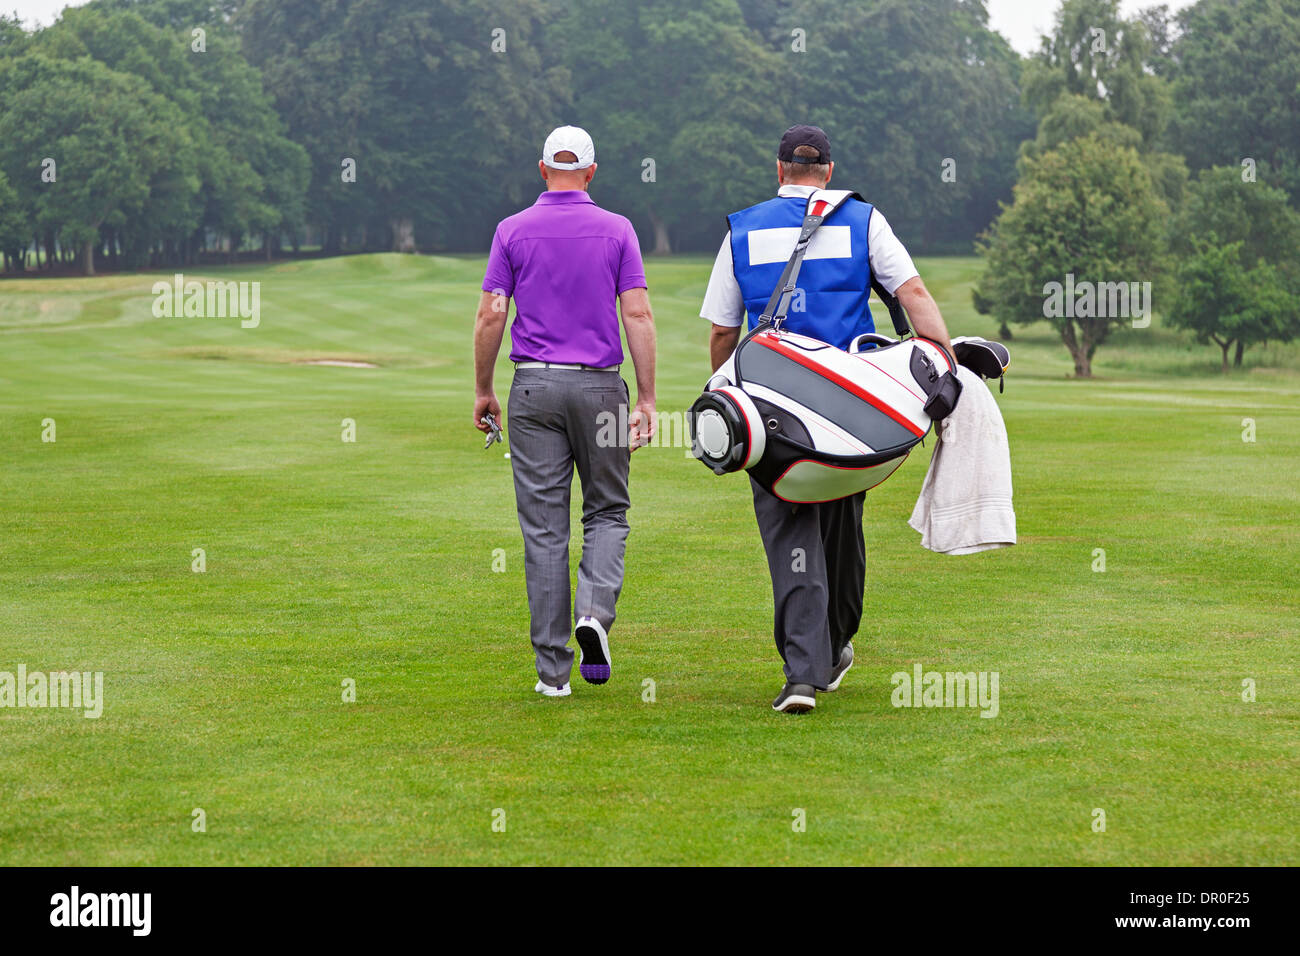 Golfer and caddy walking towards a ball on a par 4 fairway. Stock Photo